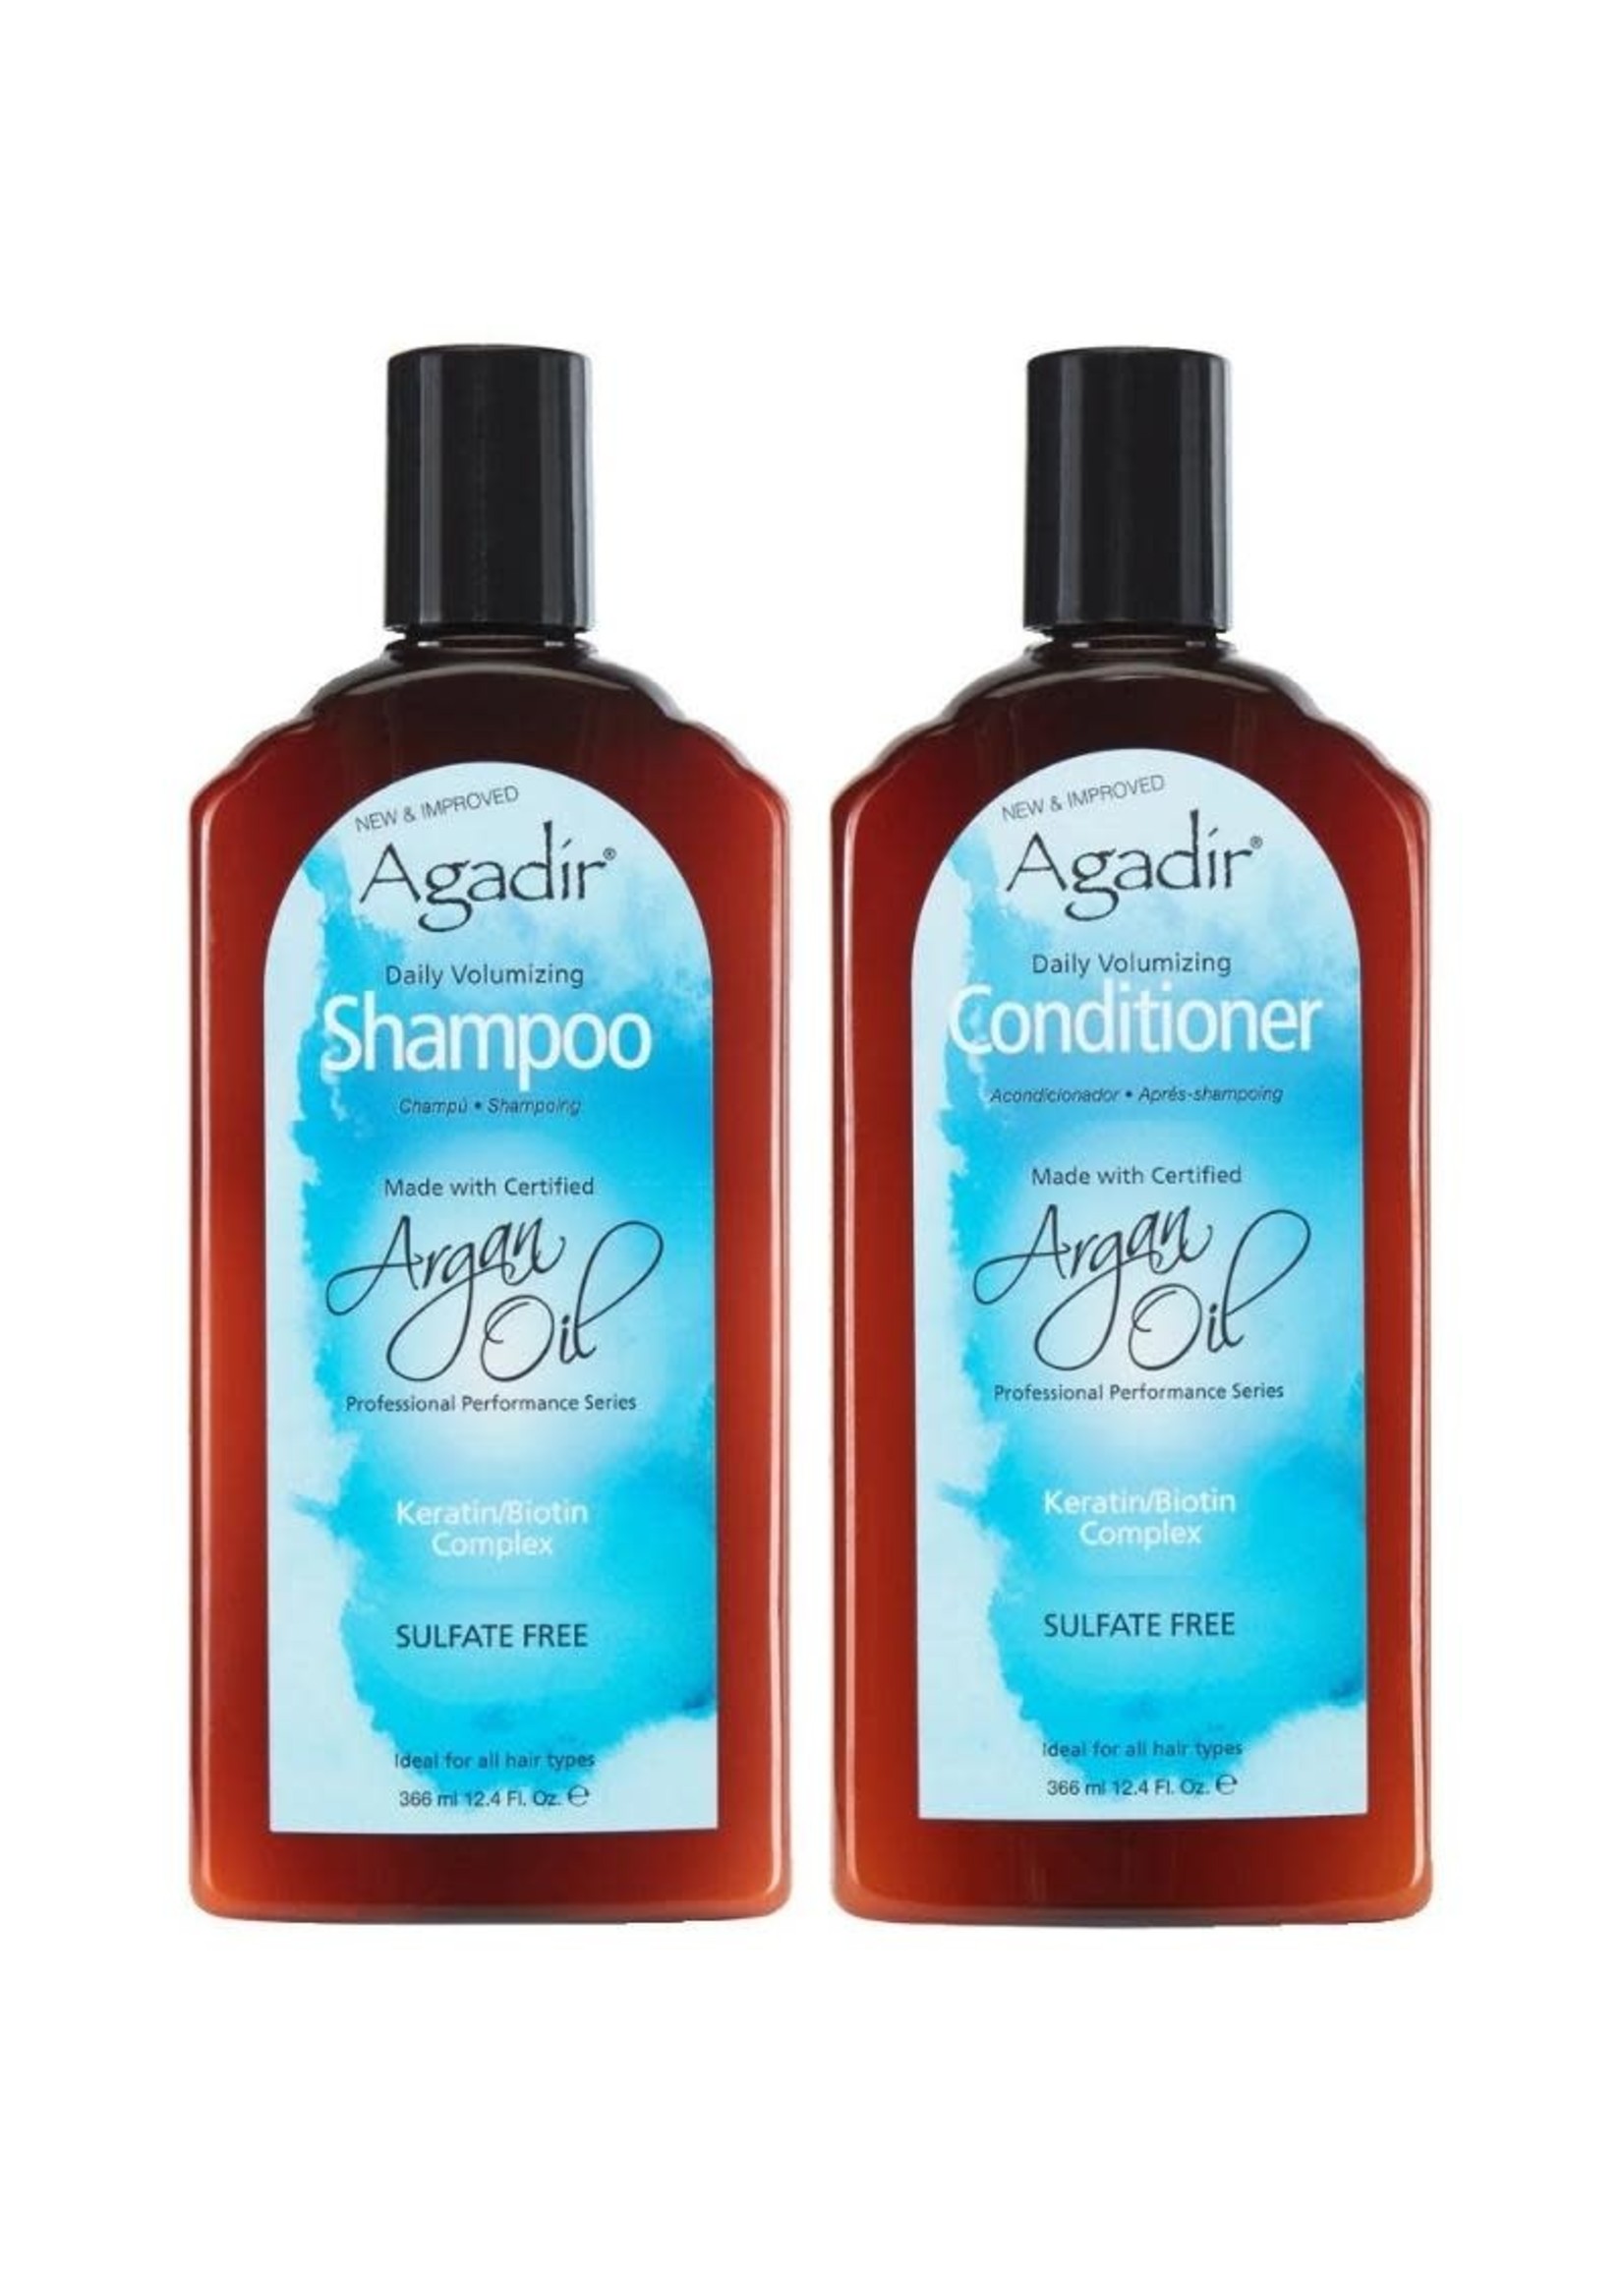 Agadir Agadir Daily Volumizing Duo Pack - Shampoo and Conditioner 366ml